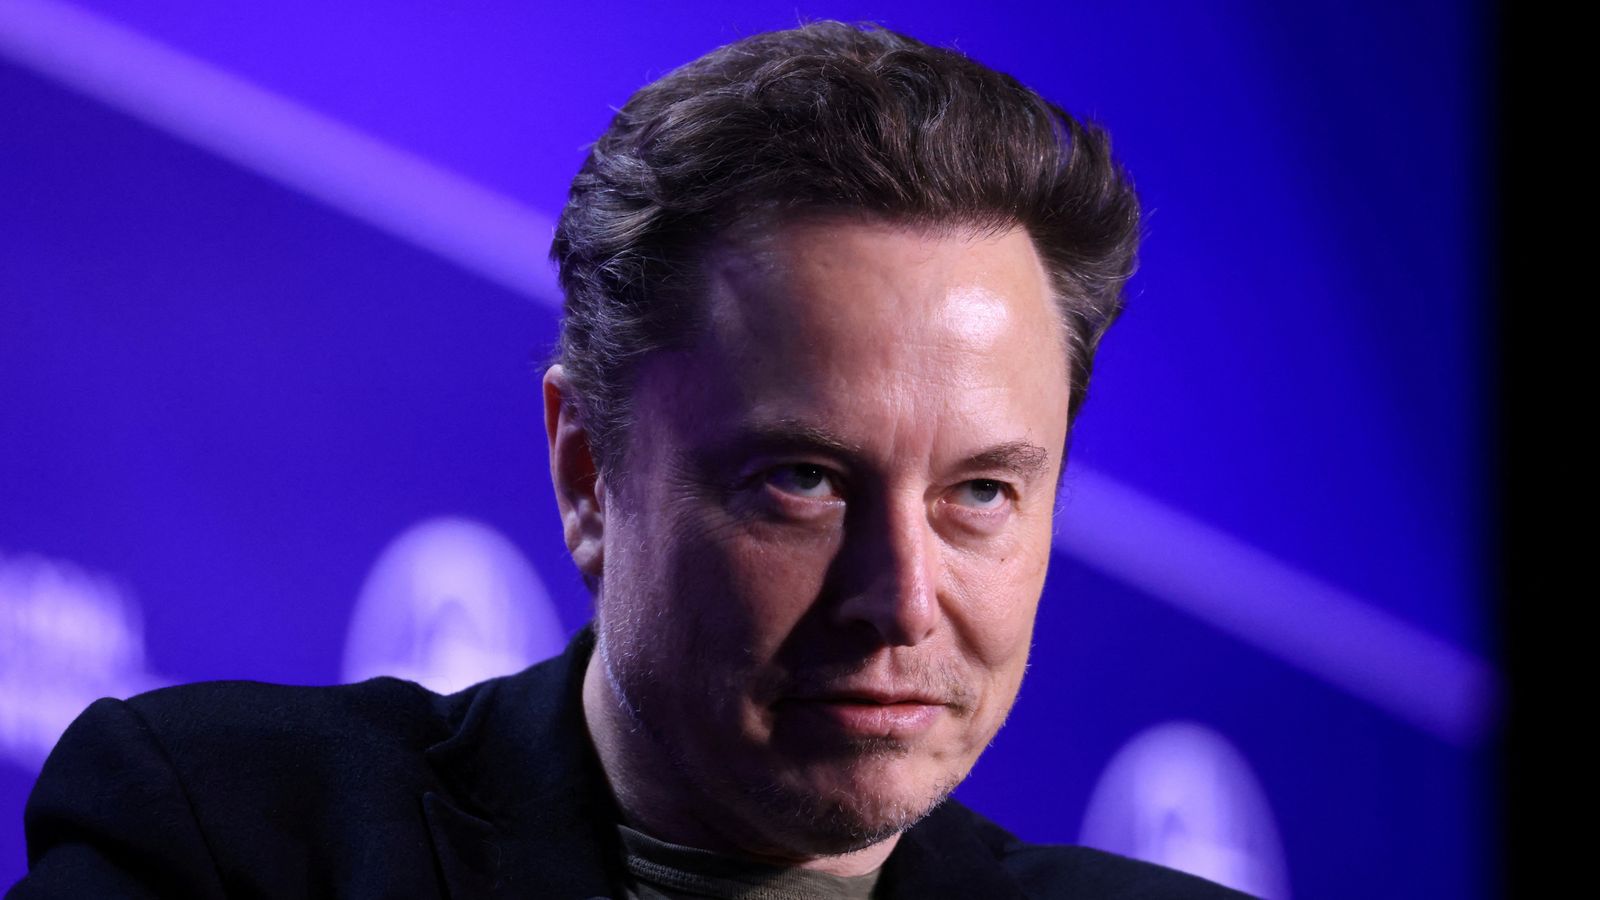 Tesla shareholders approve Elon Musk's bn pay package